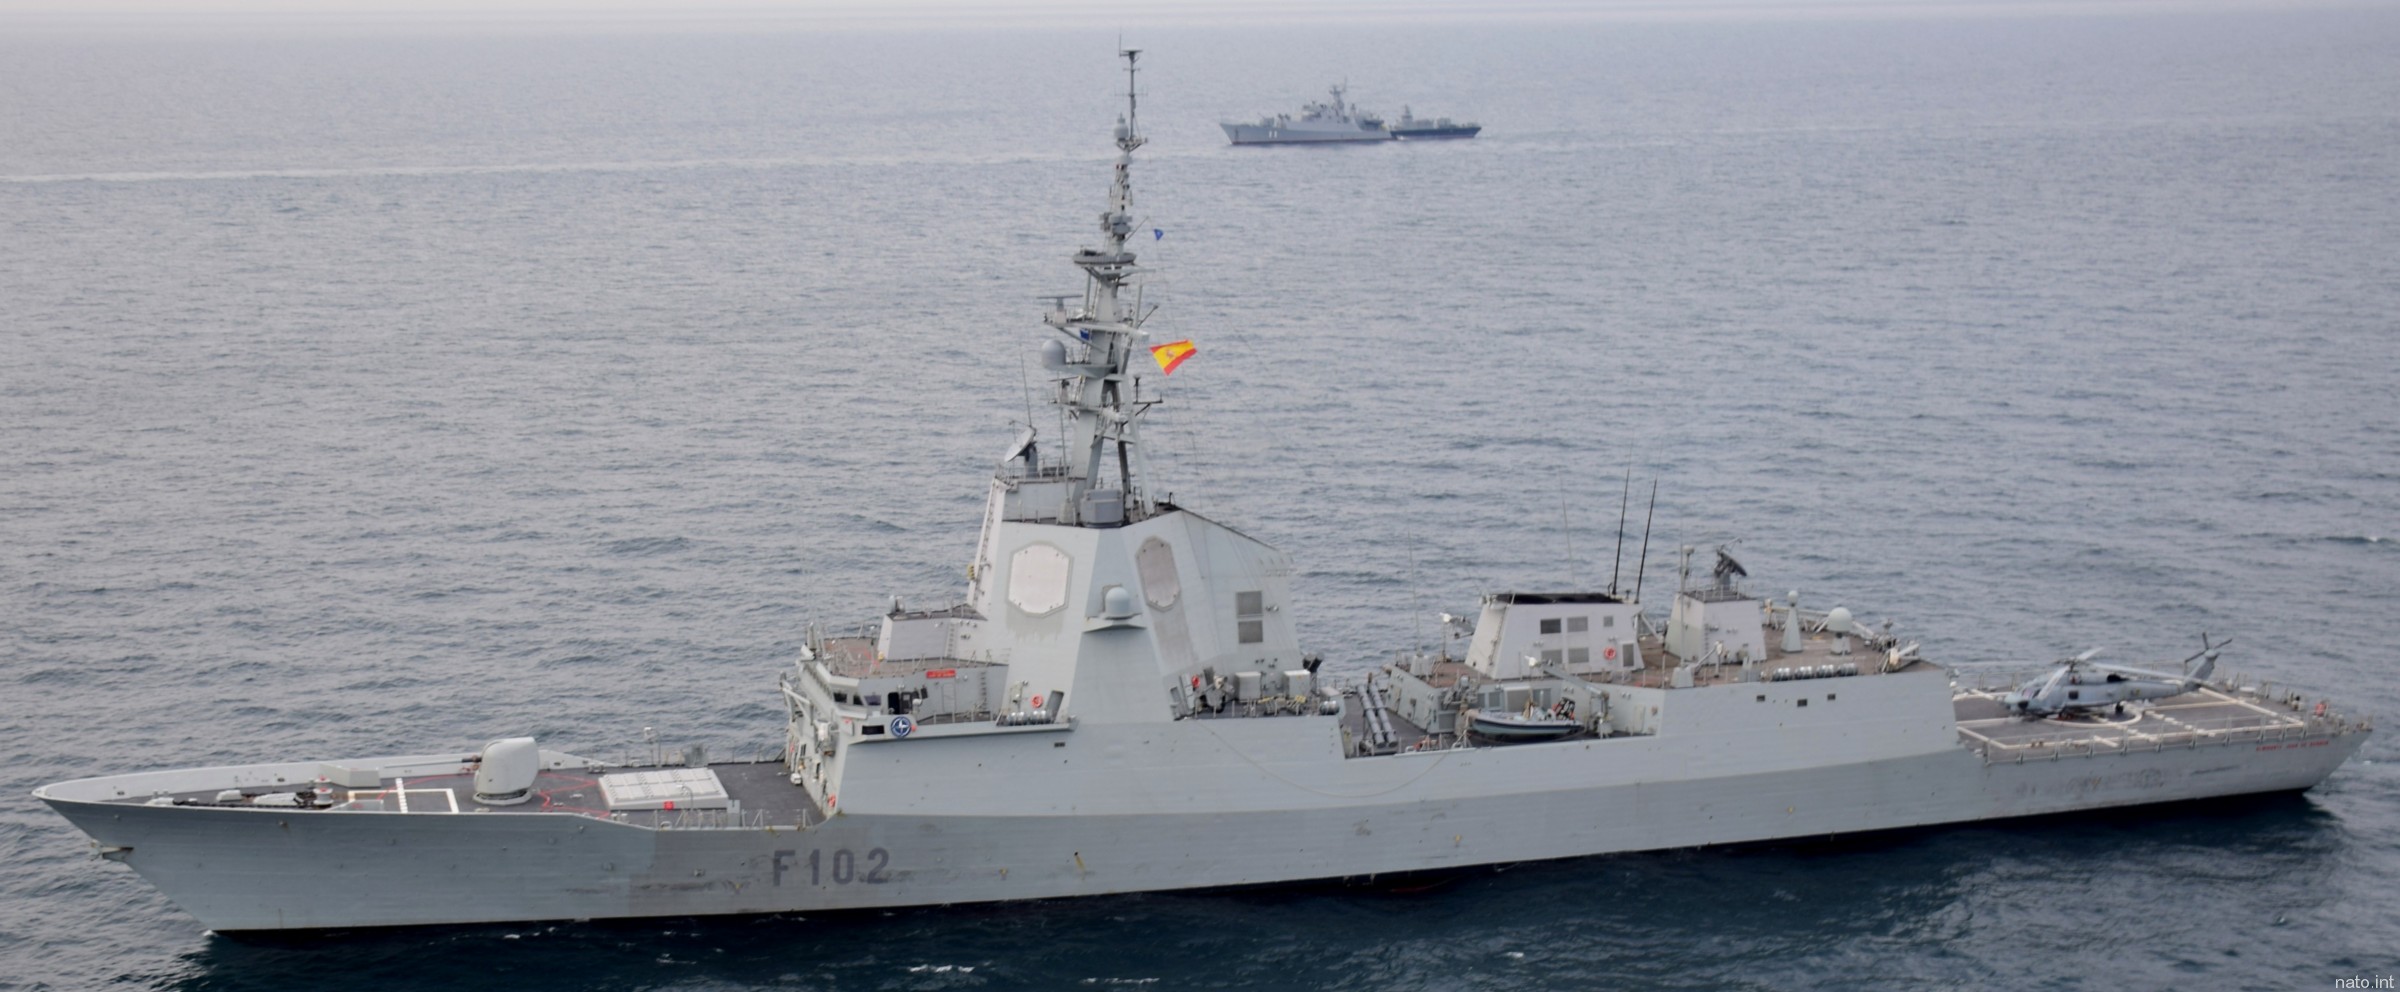 f-102 sps juan de borbon f100 bazan class guided missile frigate spanish navy 17